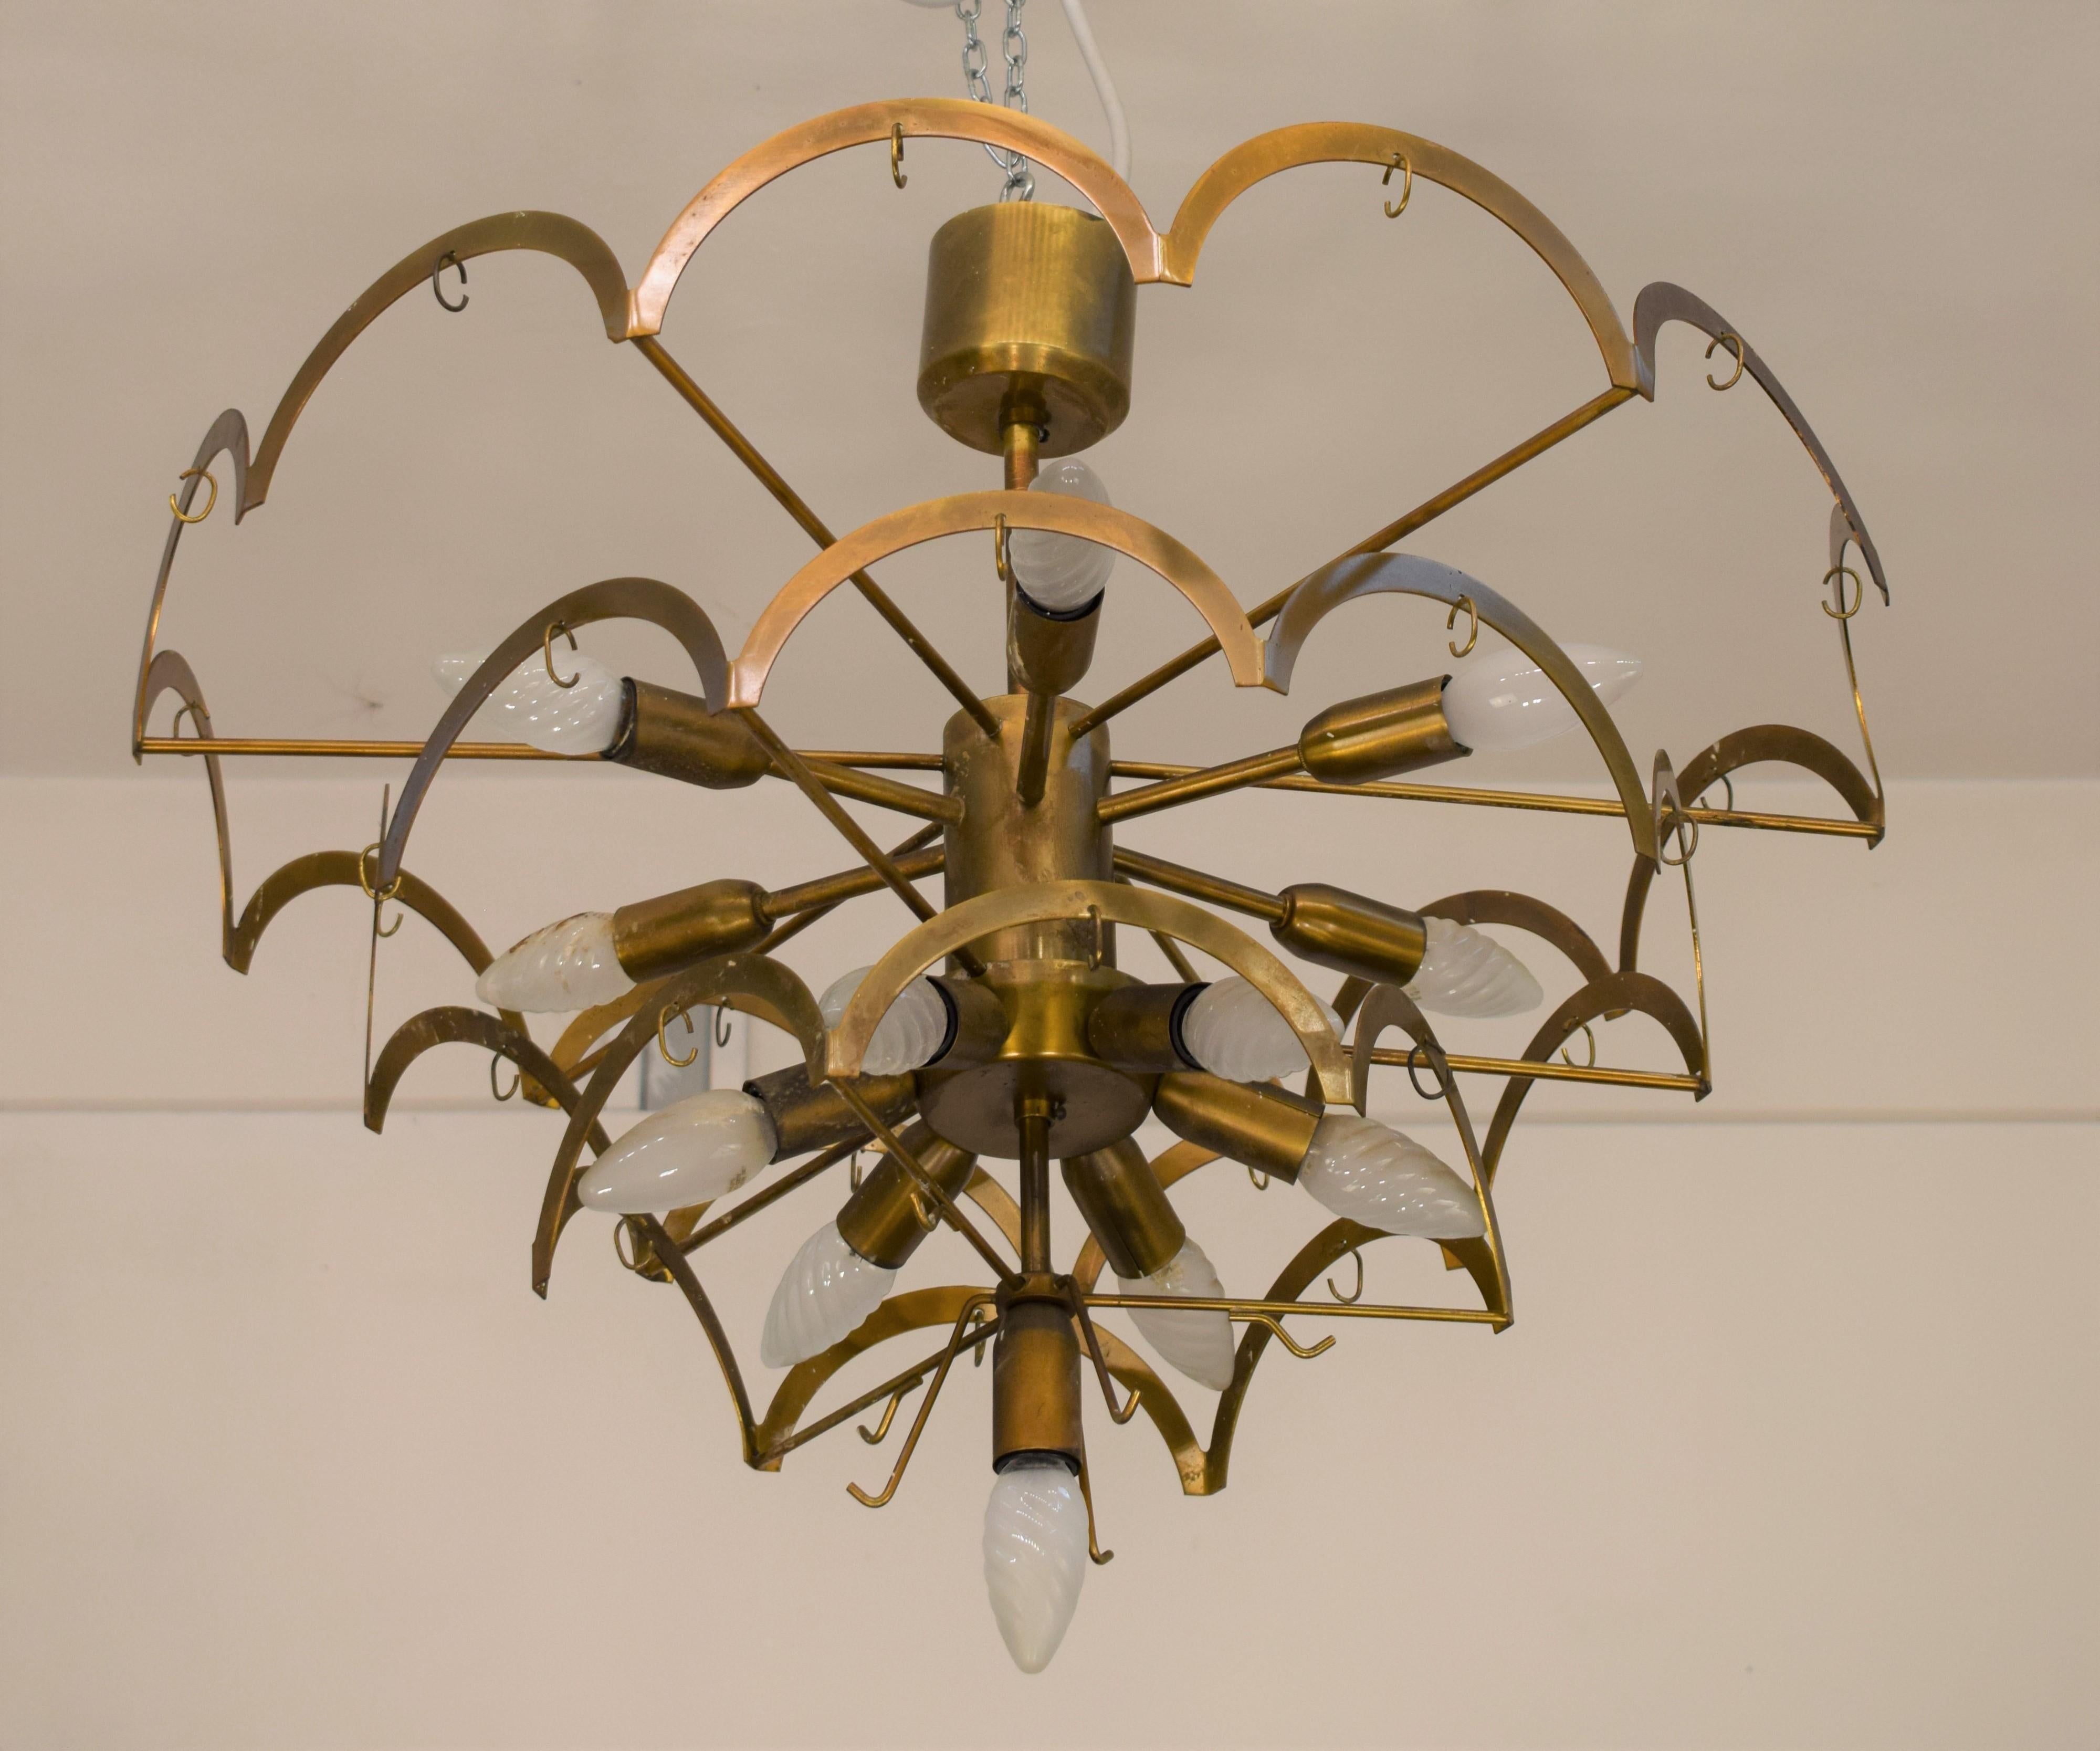 Italian chandelier by Vistosi, 1960s.

Dimensions: H= 65 cm; D= 65 cm.